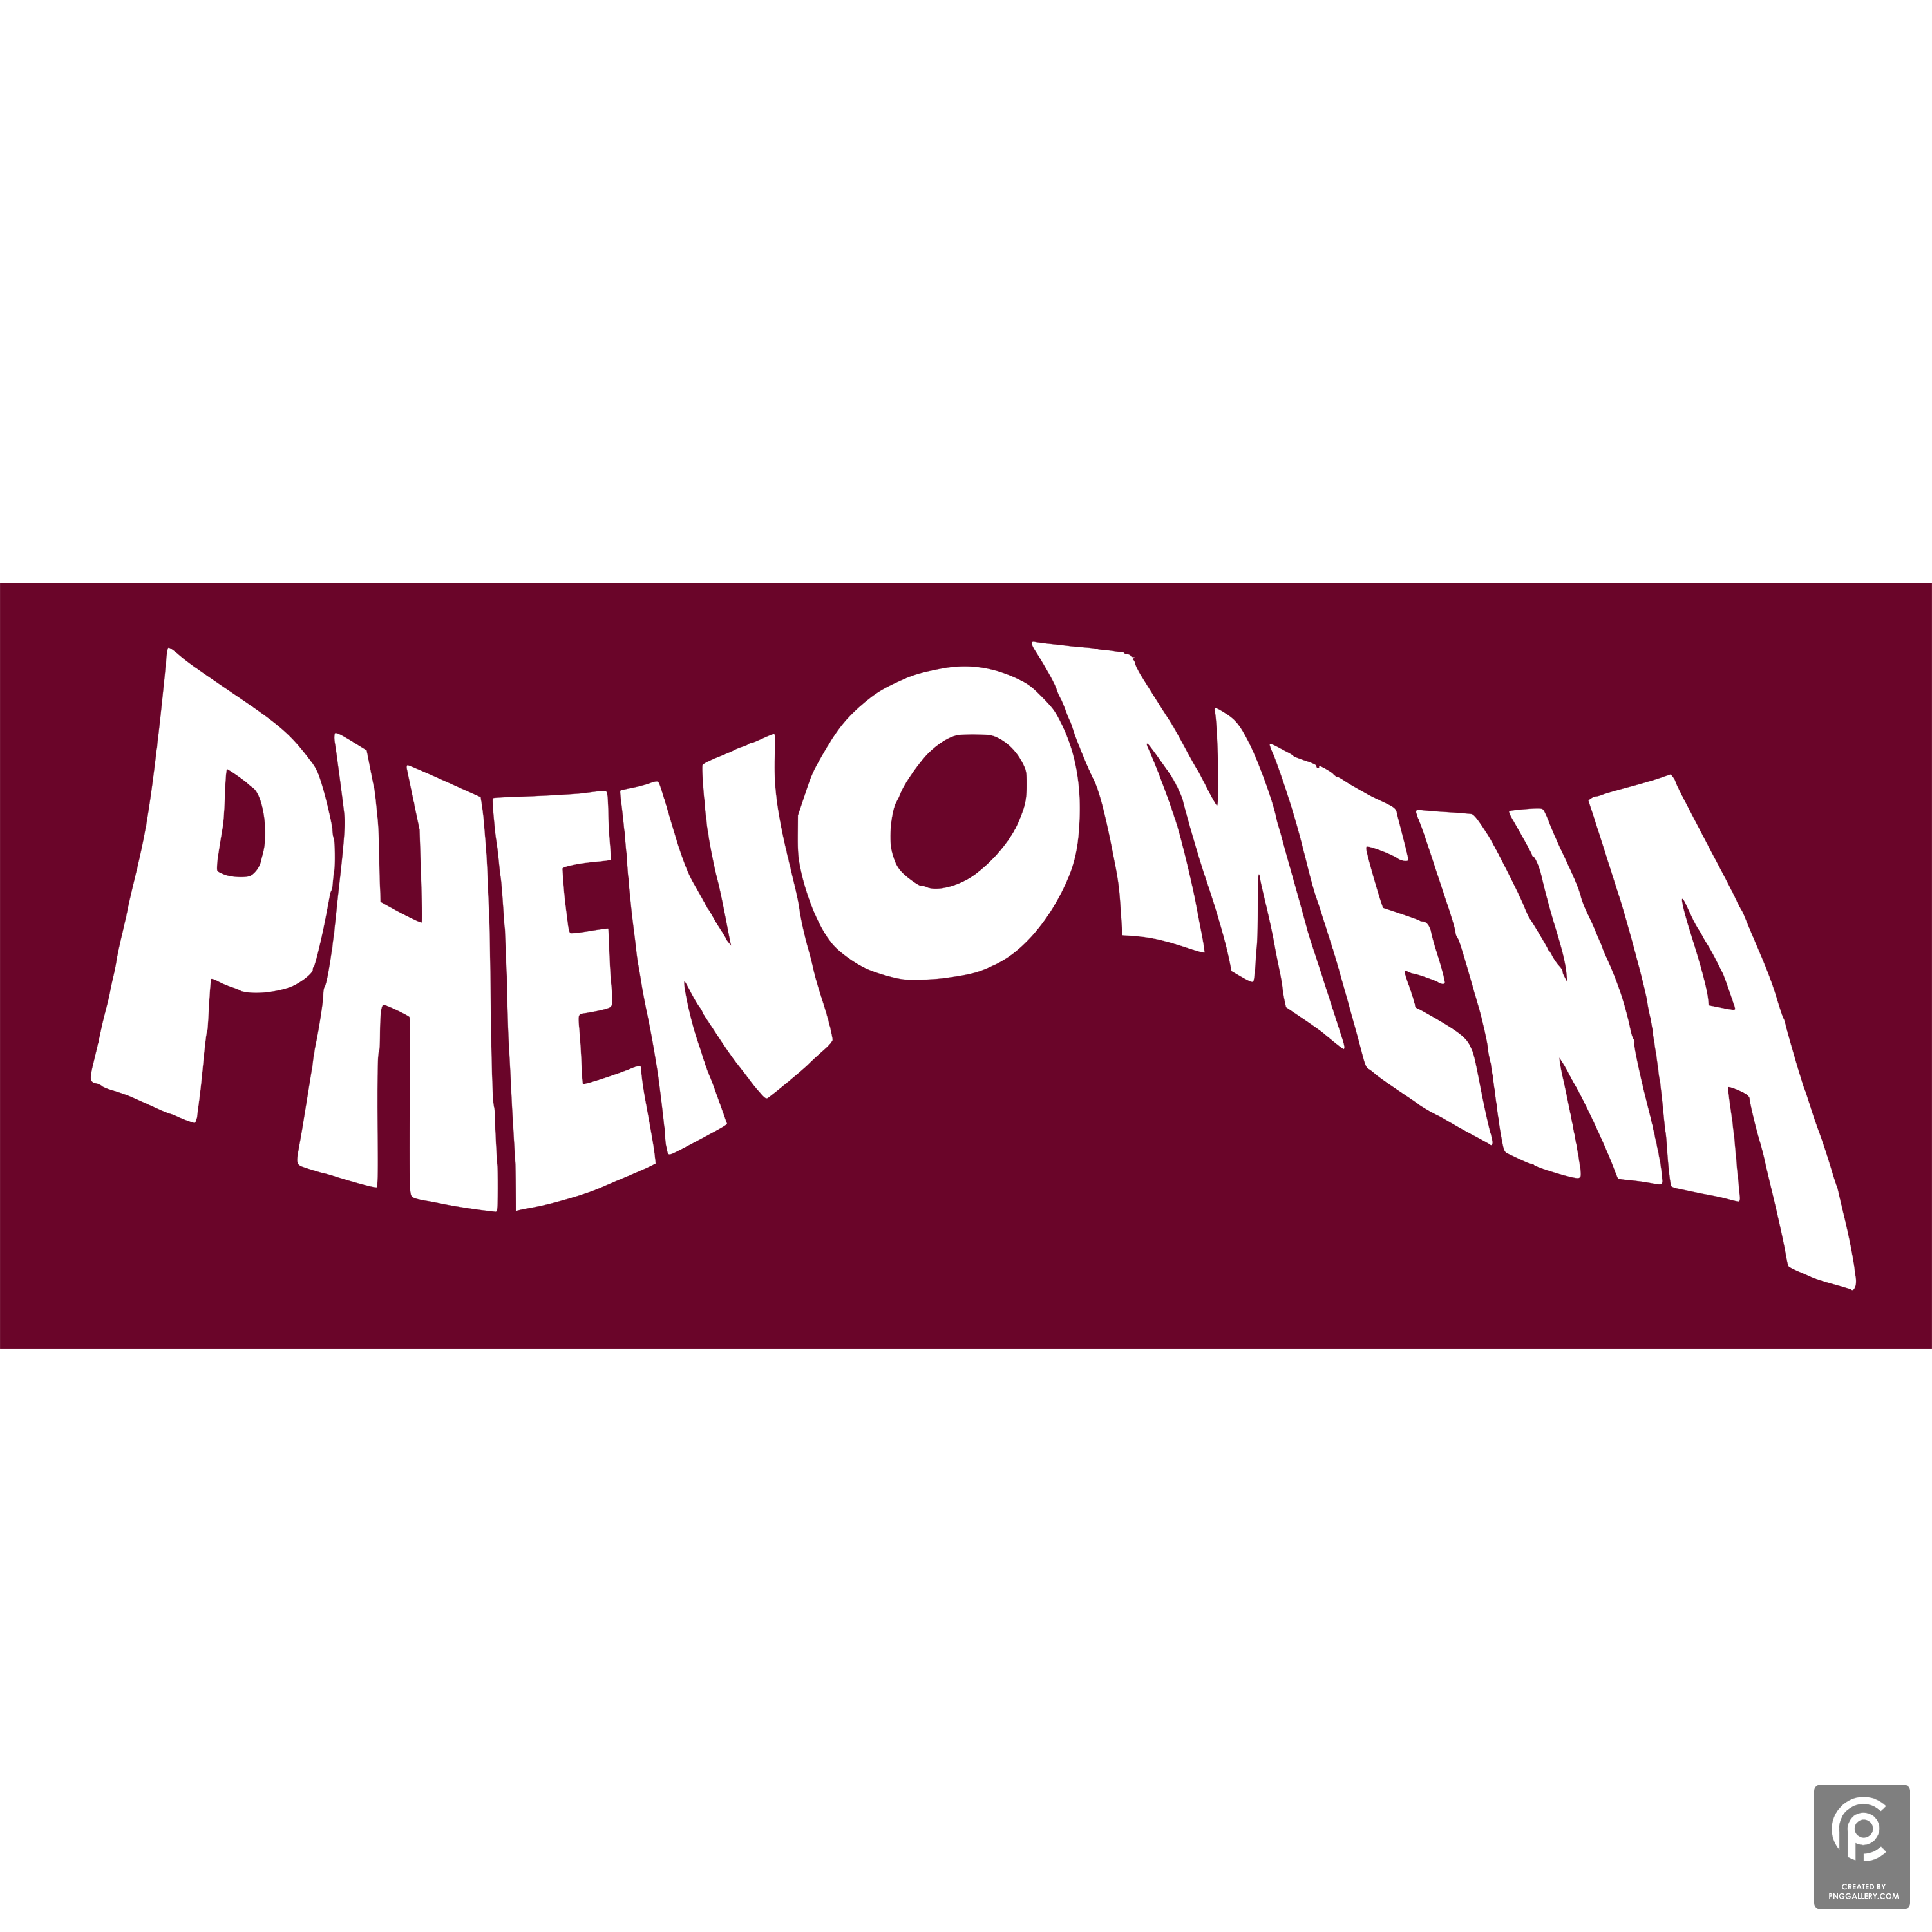 Phenomena Logo Transparent Gallery